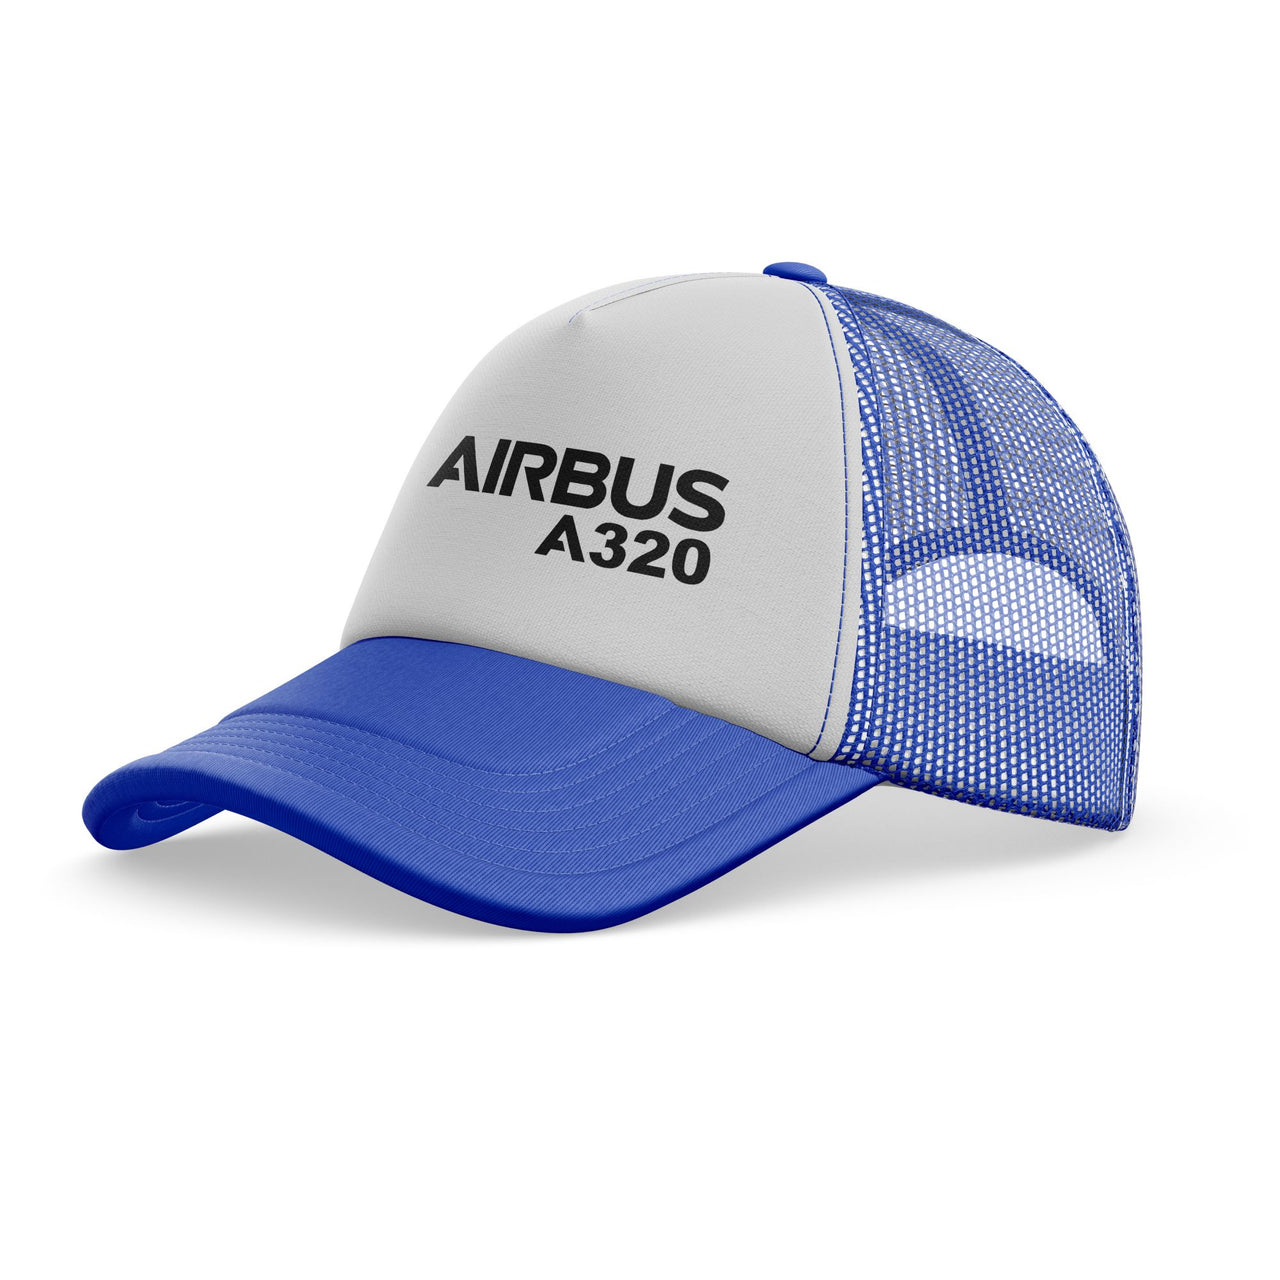 Airbus A320 & Text Designed Trucker Caps & Hats